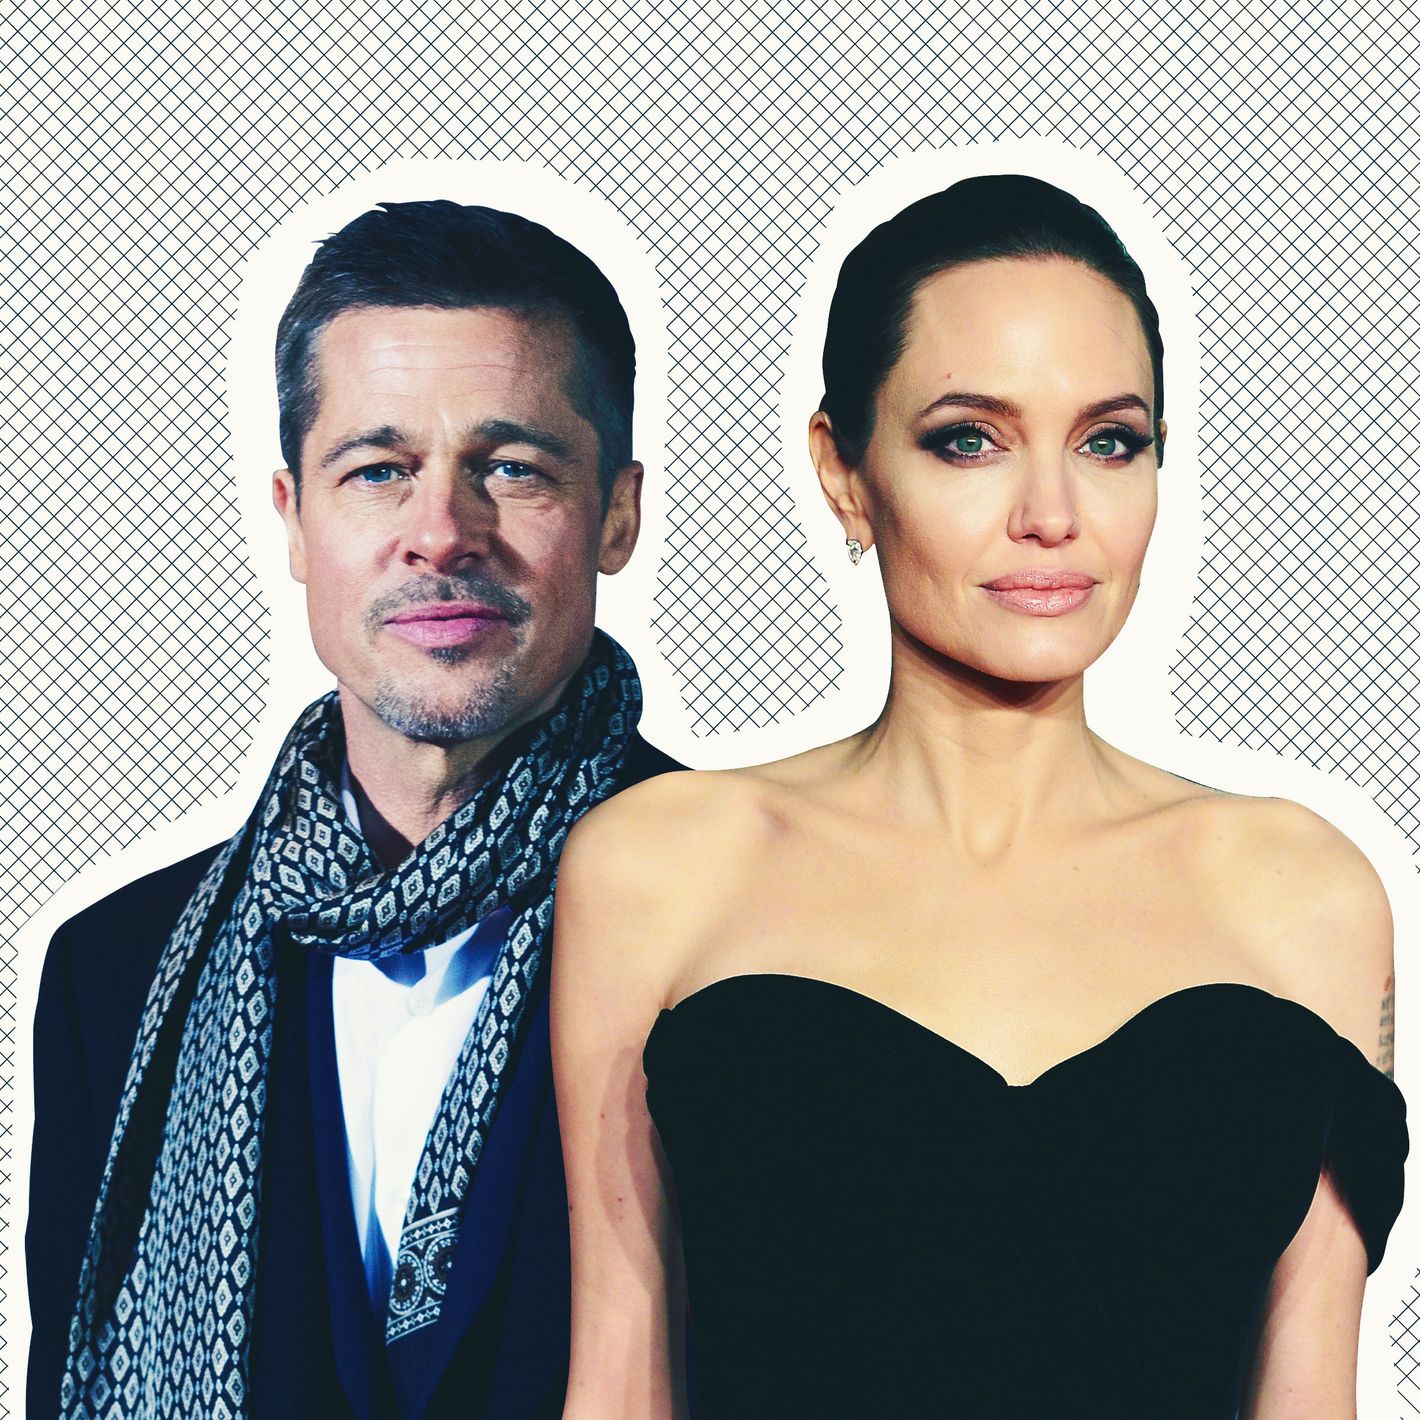 Does Angelina Jolie Have a New 'Millionaire' Boyfriend?